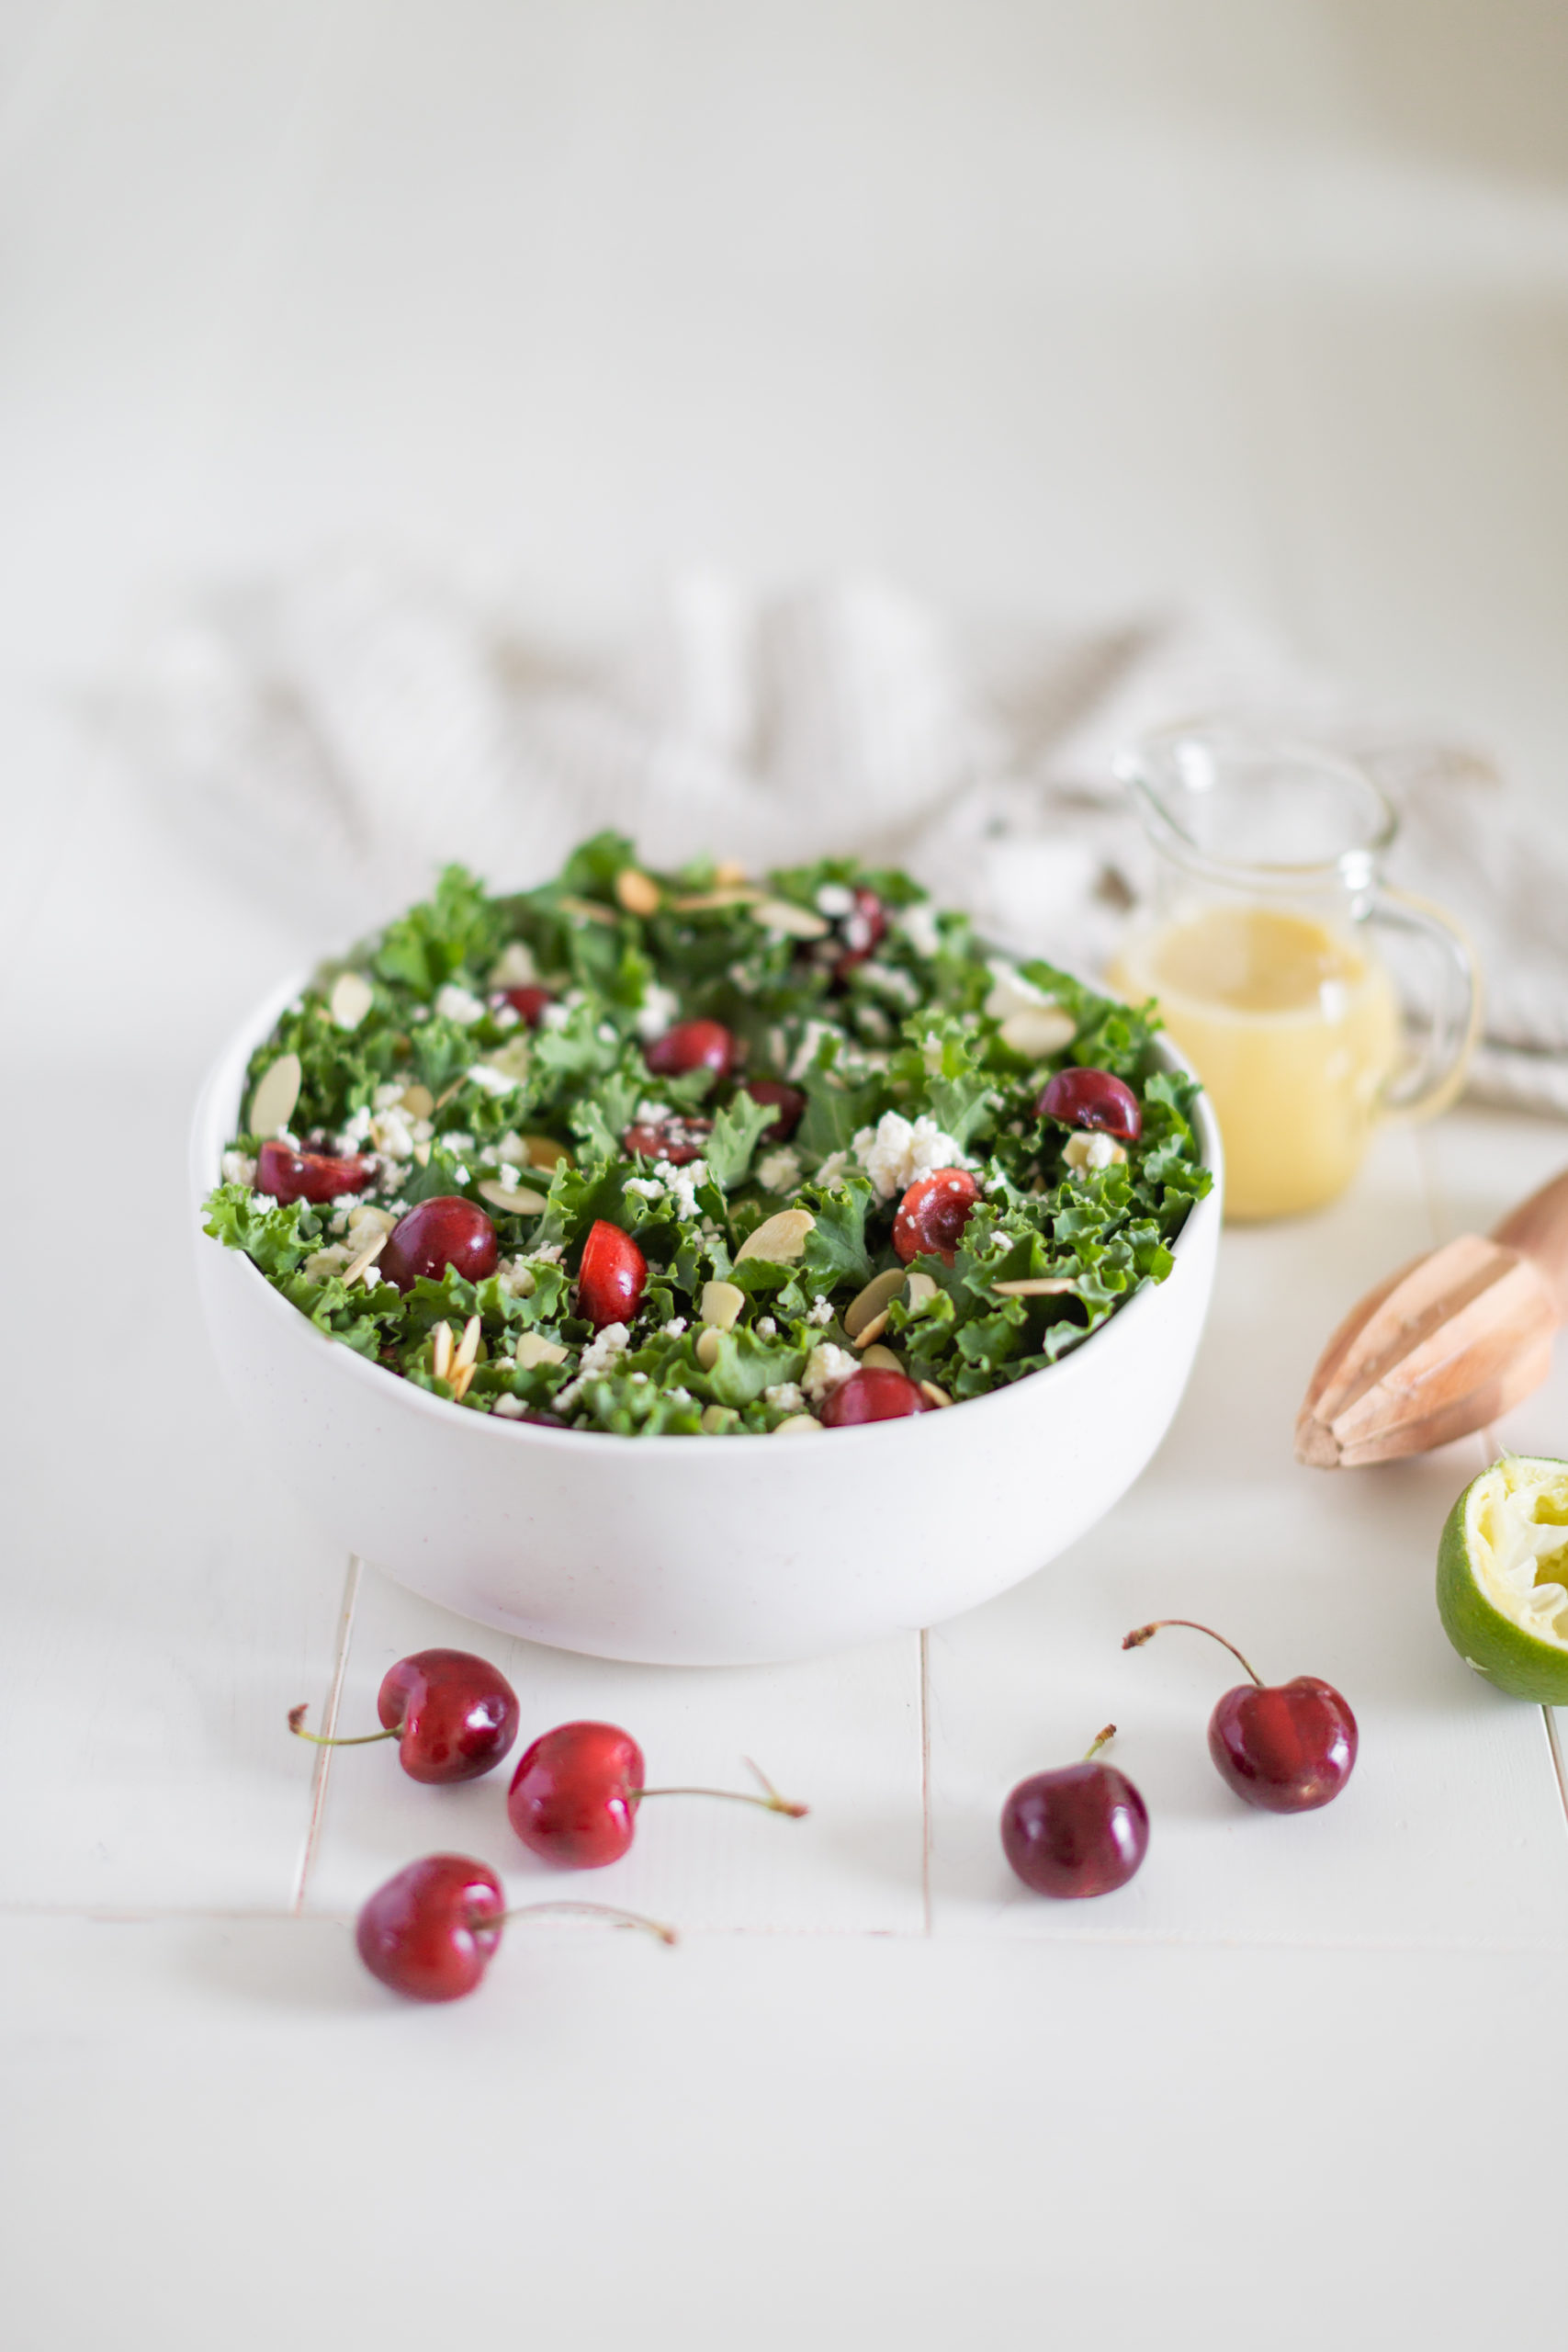 Summer Cherry Kale Salad Recipe with Honey Lime Vinaigrette (Gluten Free & Vegan)